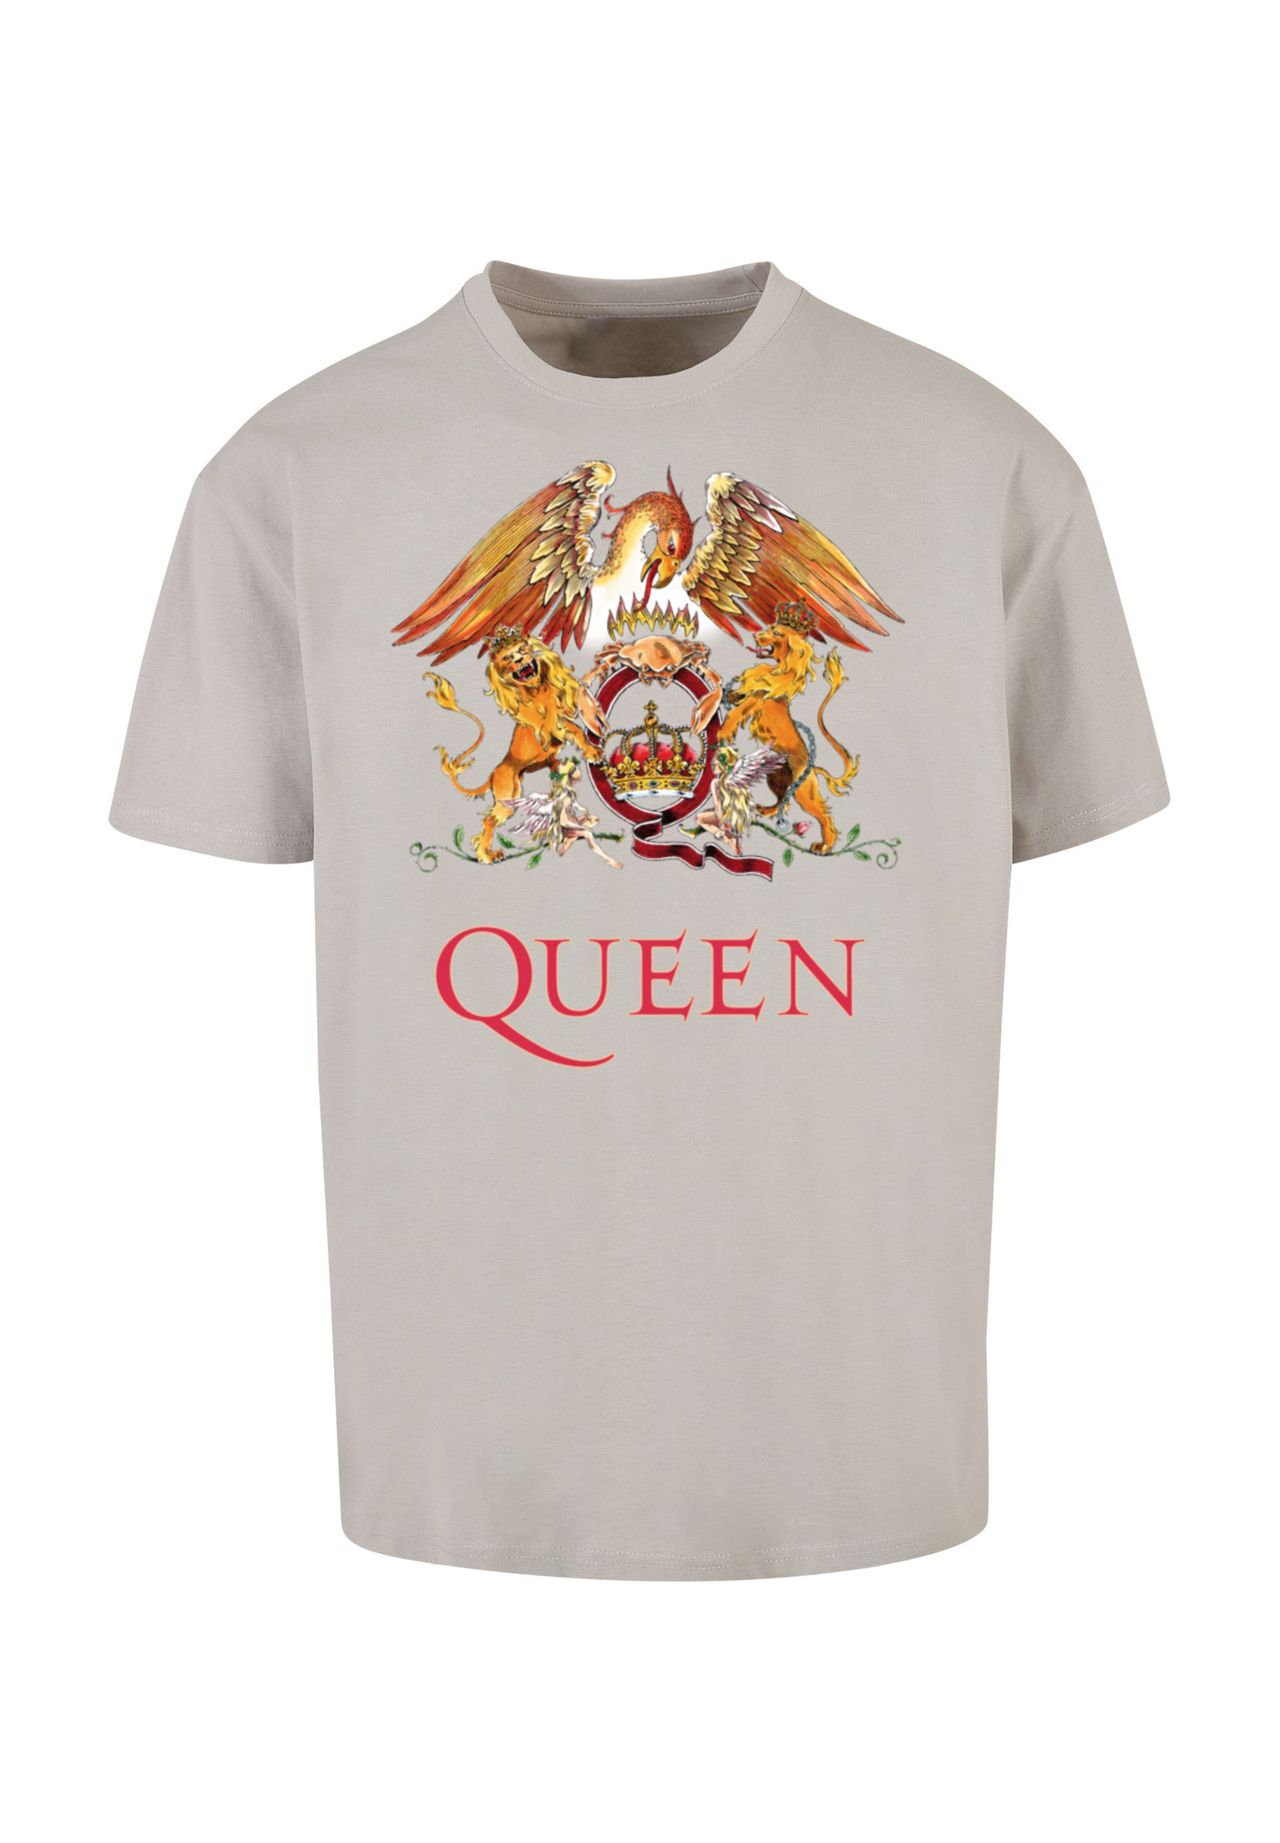 Queen | F4NT4STIC Classic Black Heavy T-Shirt GALERIA Crest Oversize Rockband